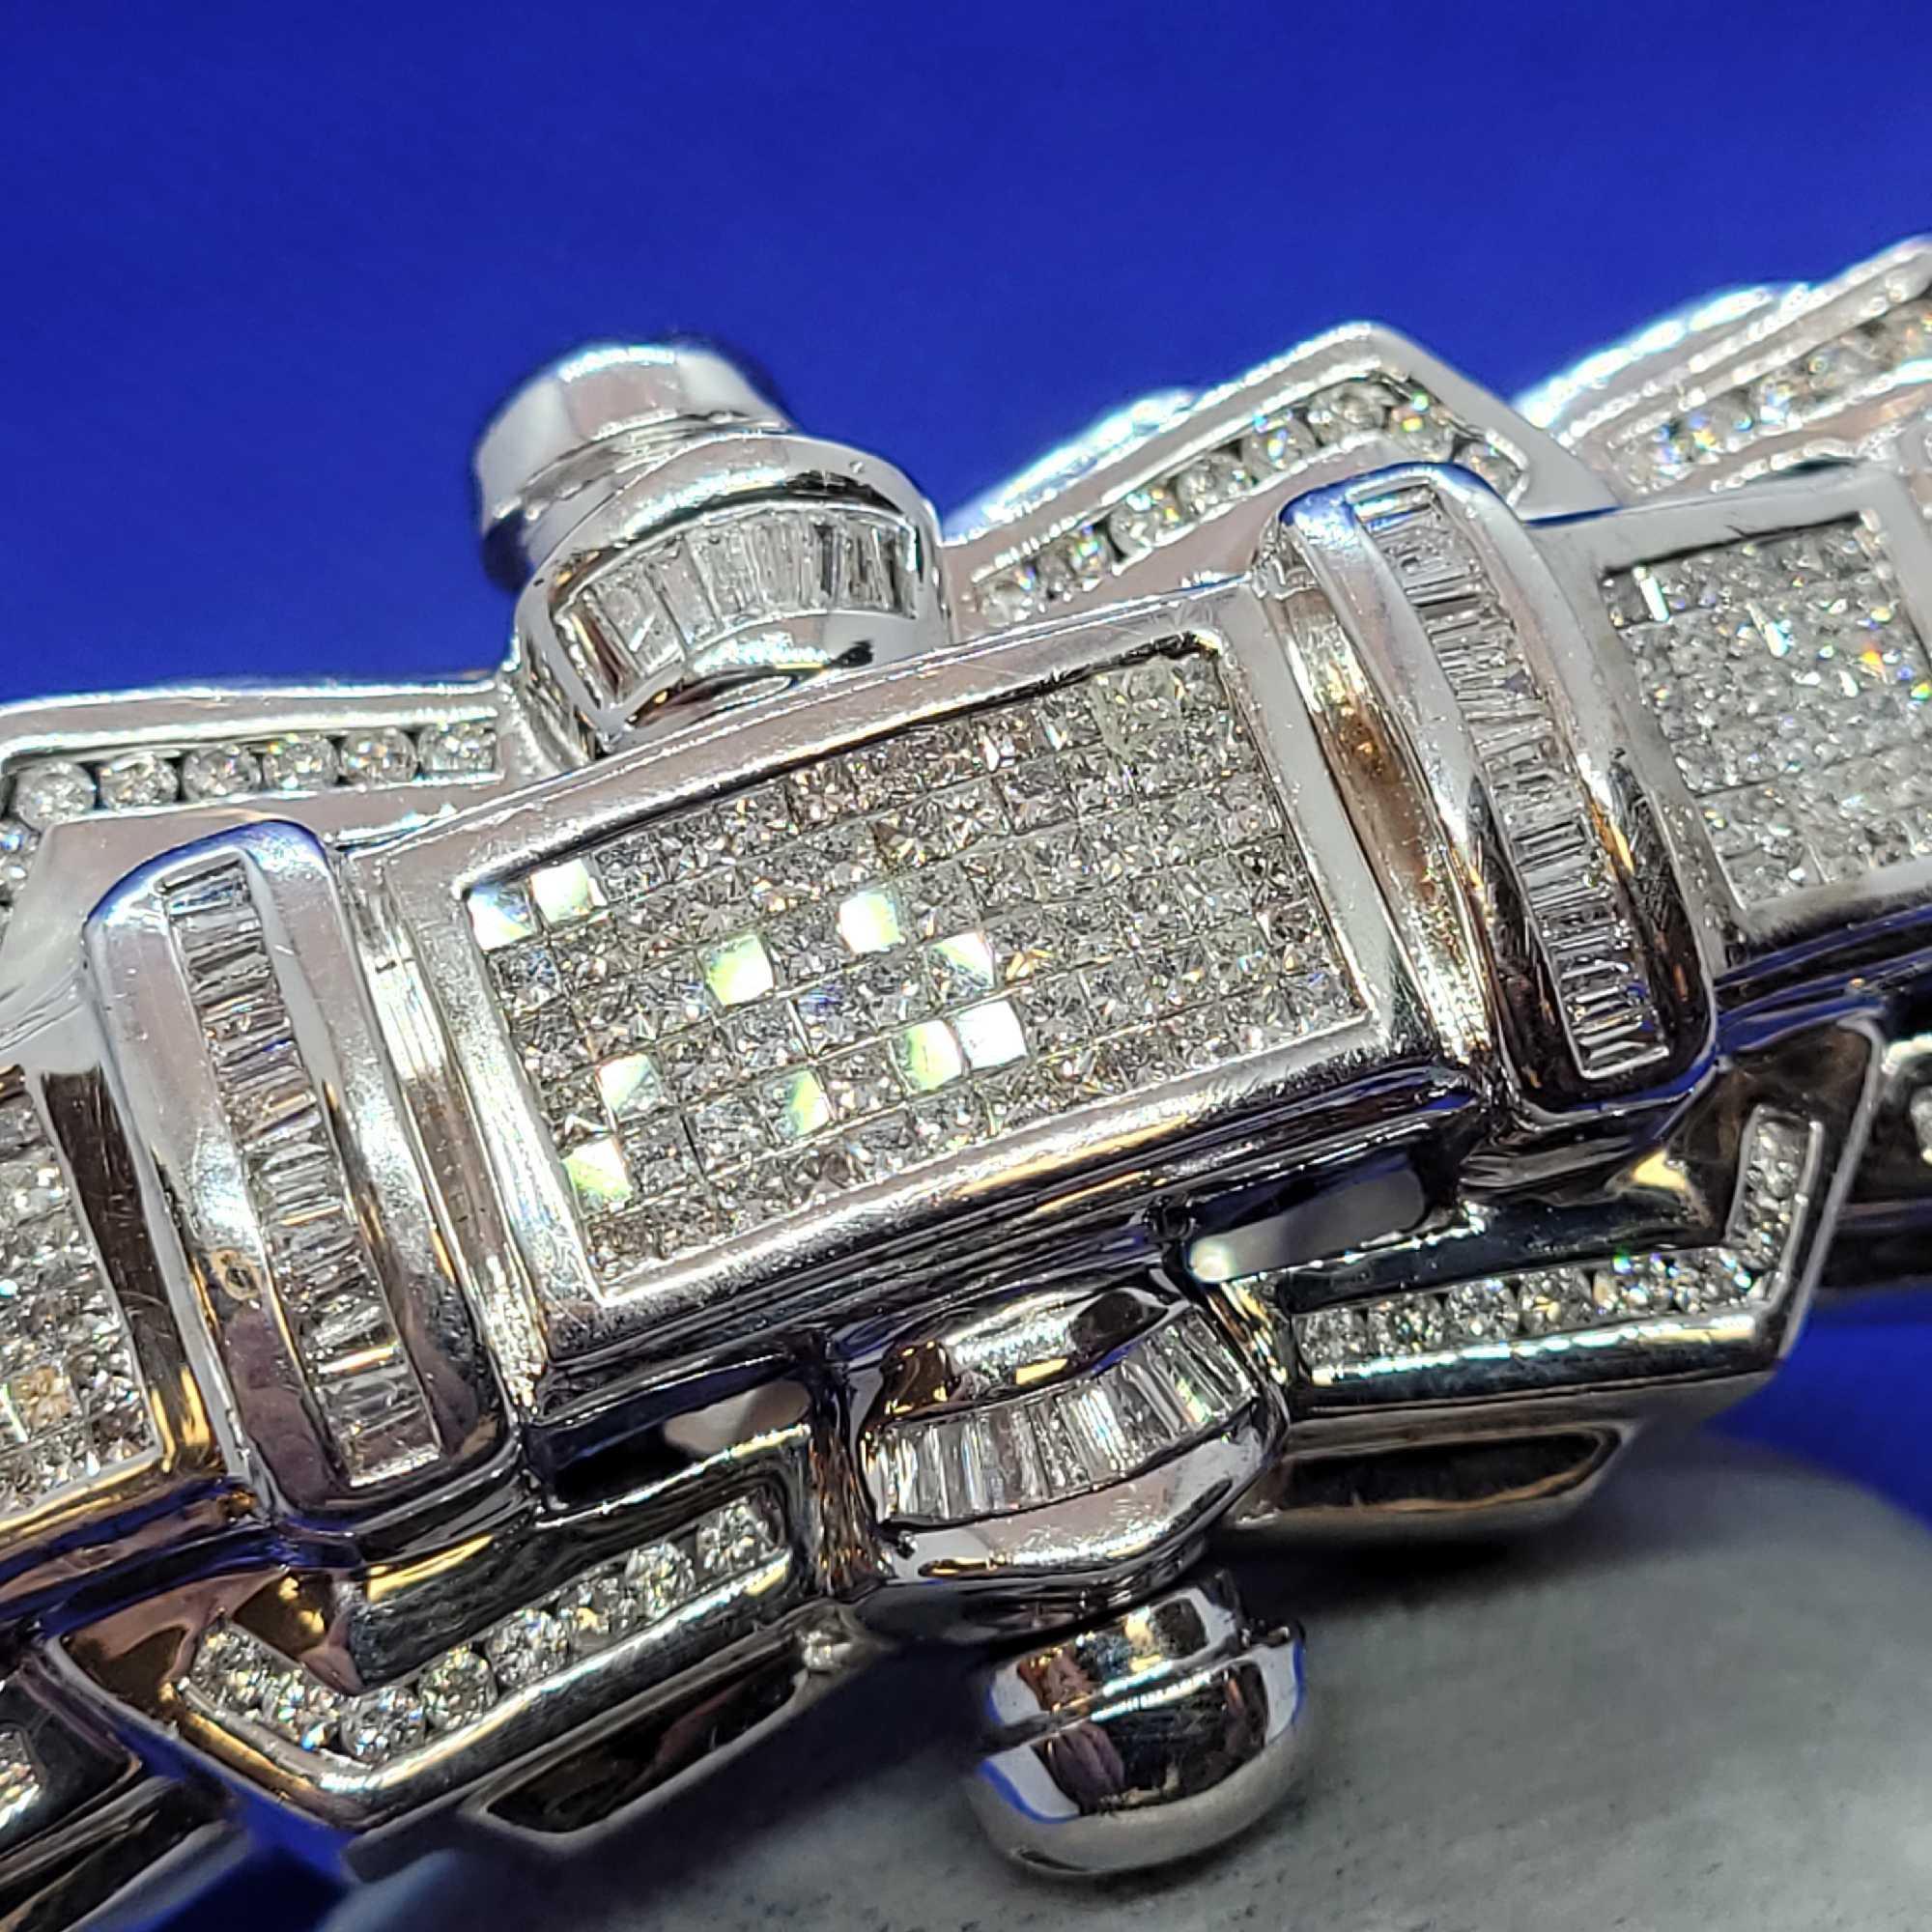 Greg Valentines Pro Wrestler 14k White Gold With Diamond Bracelet BBA Authentication